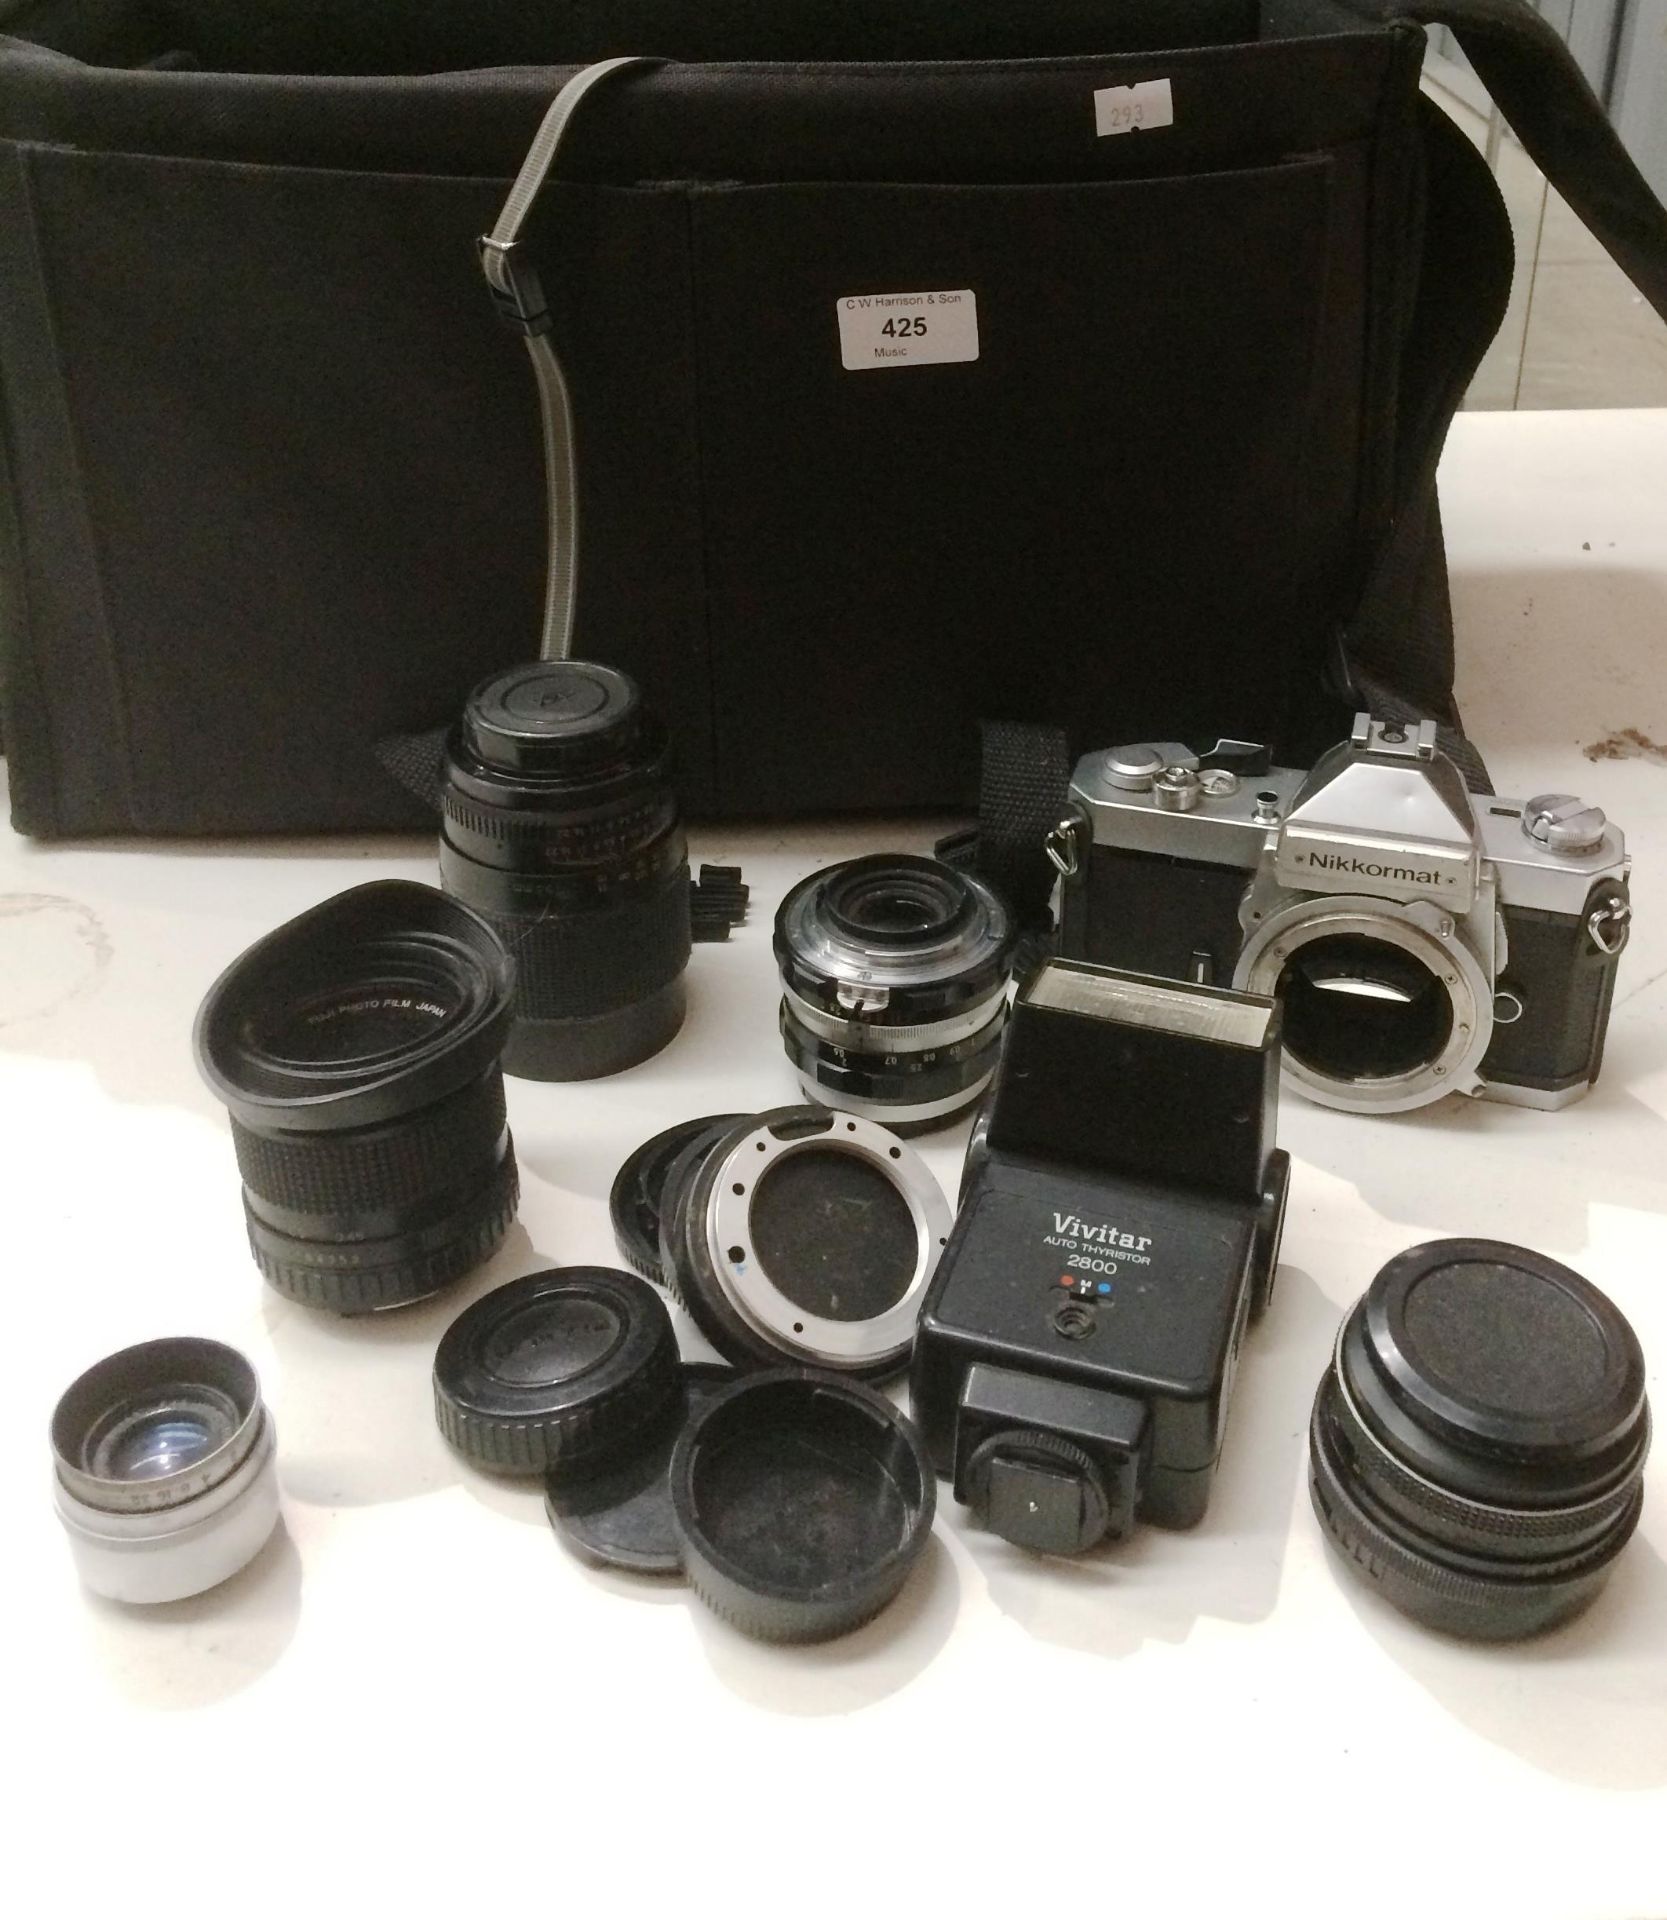 A camera bag and contents - Nikkormat camera body, a Vivitar Auto Thyristor,